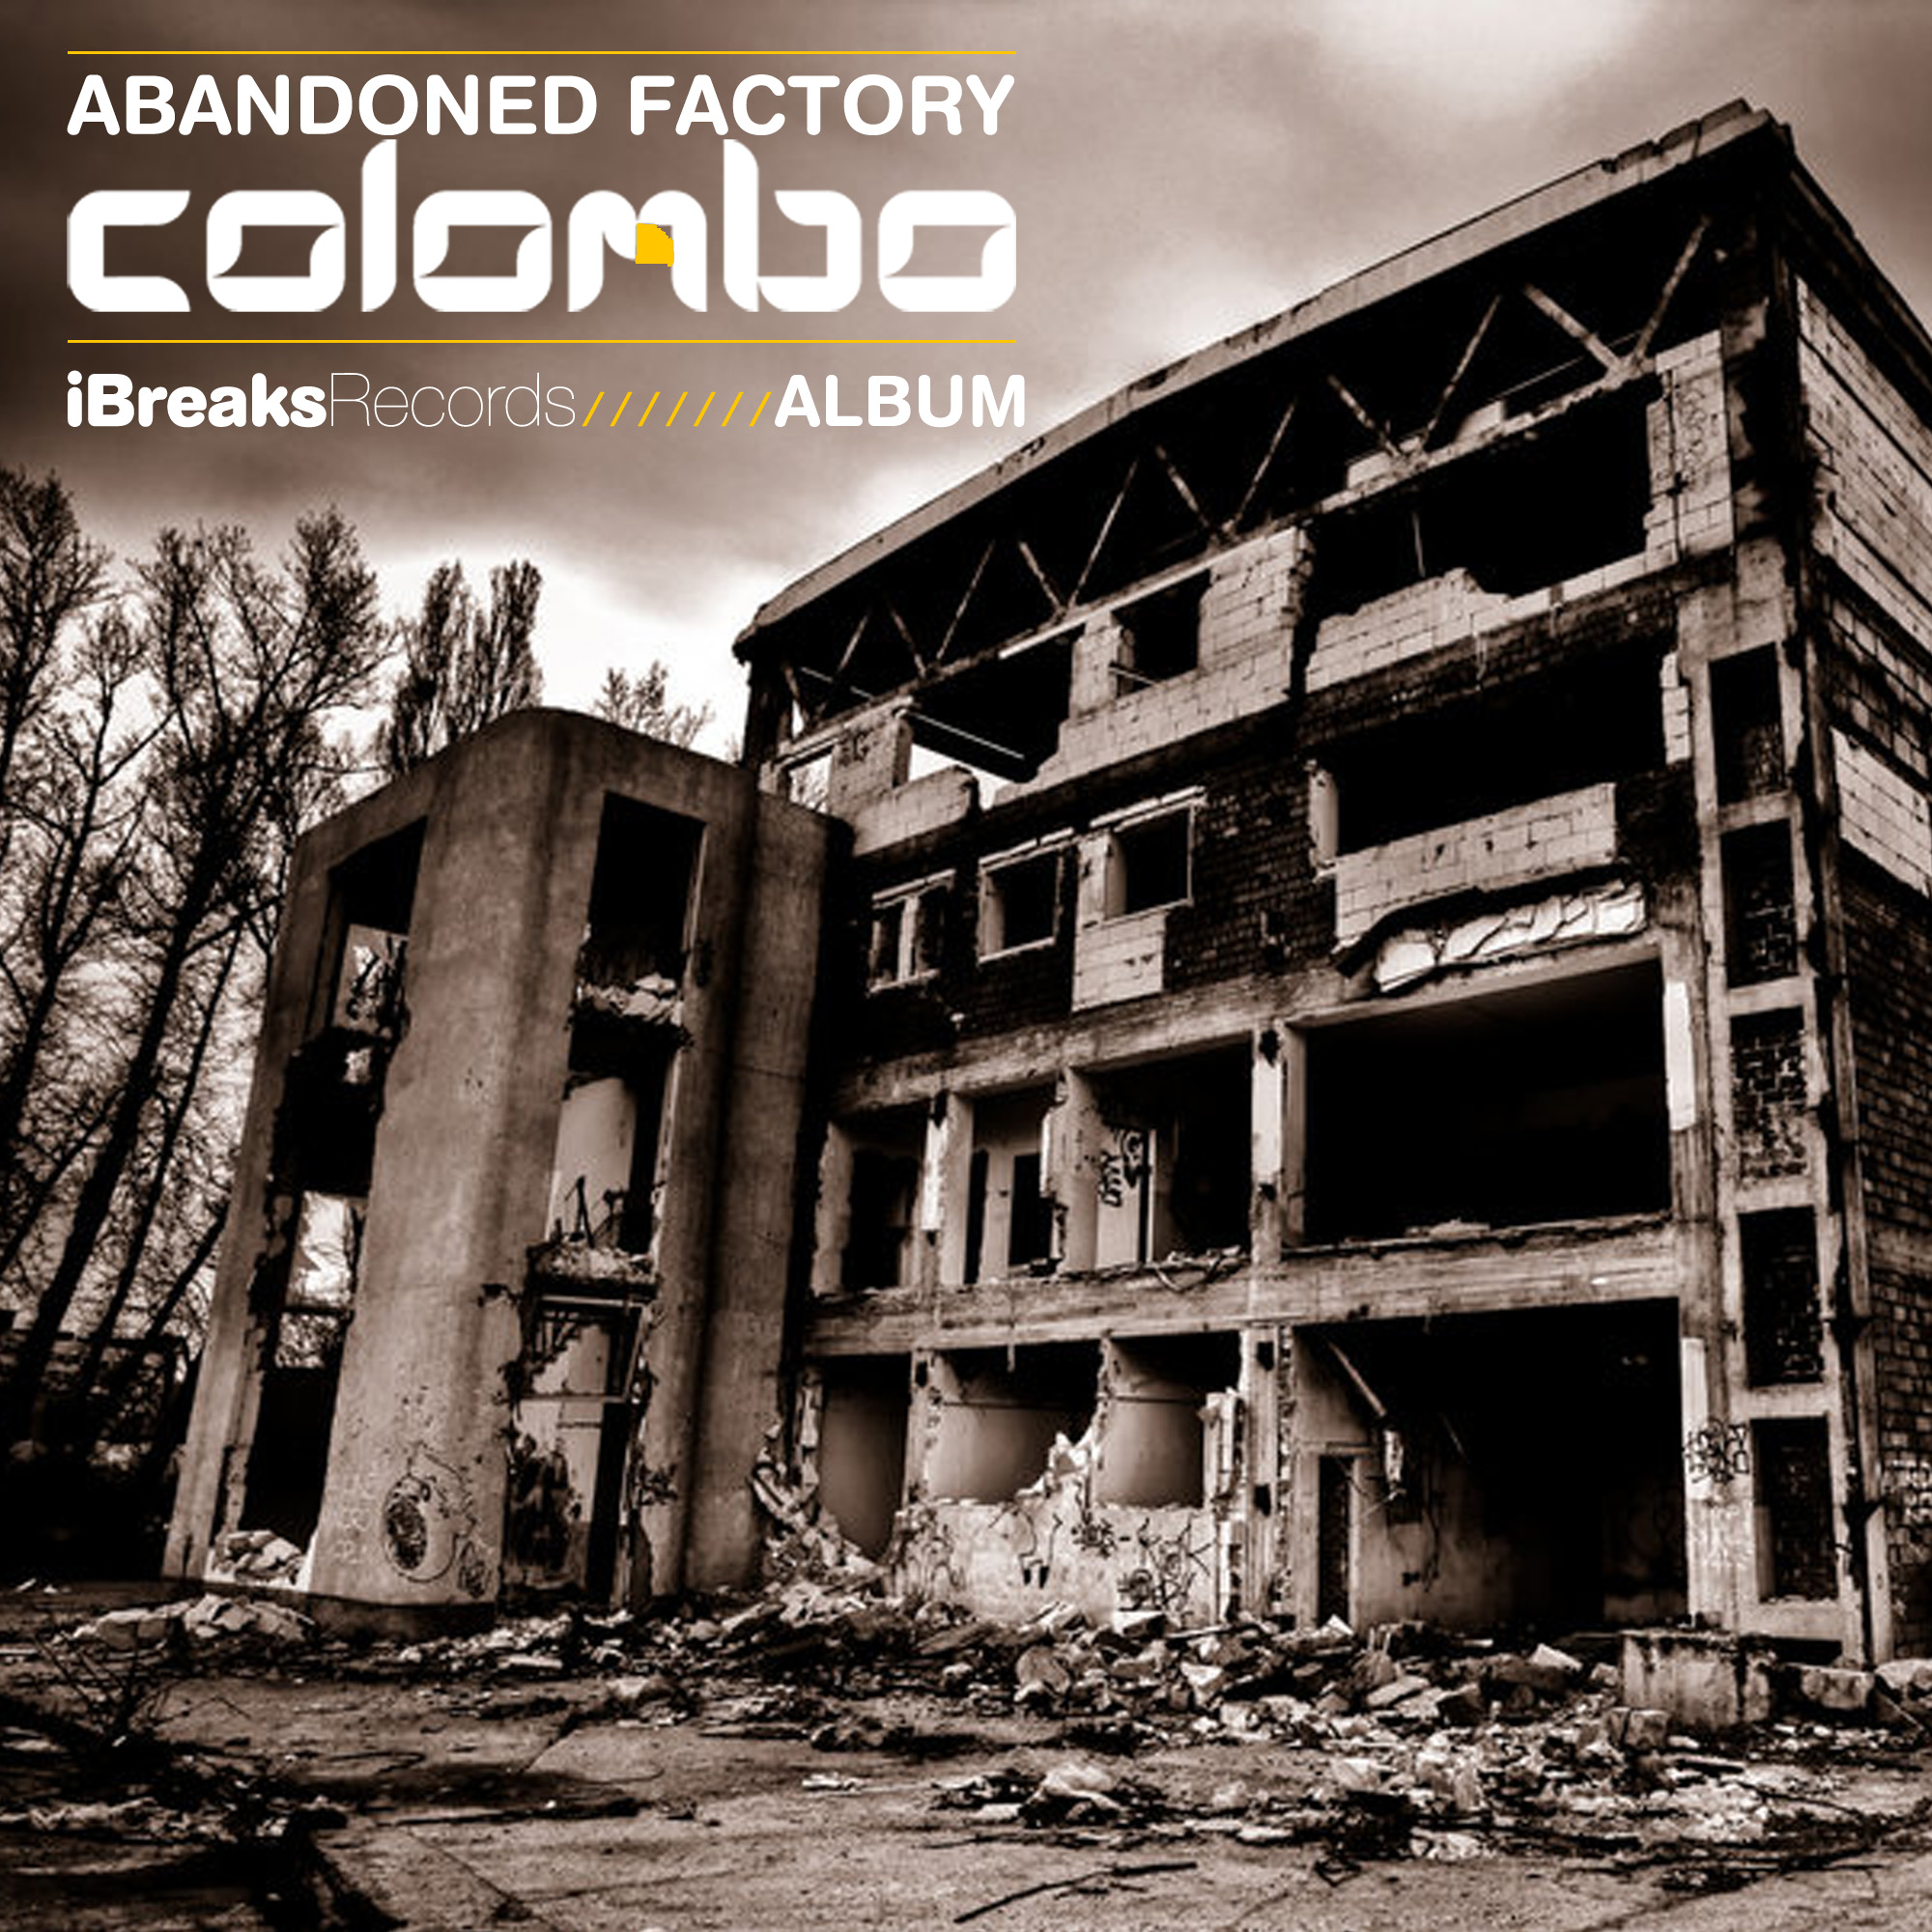 Скачать Colombo : Gods ("Album") (iBreaks) Release Date 01/11/12